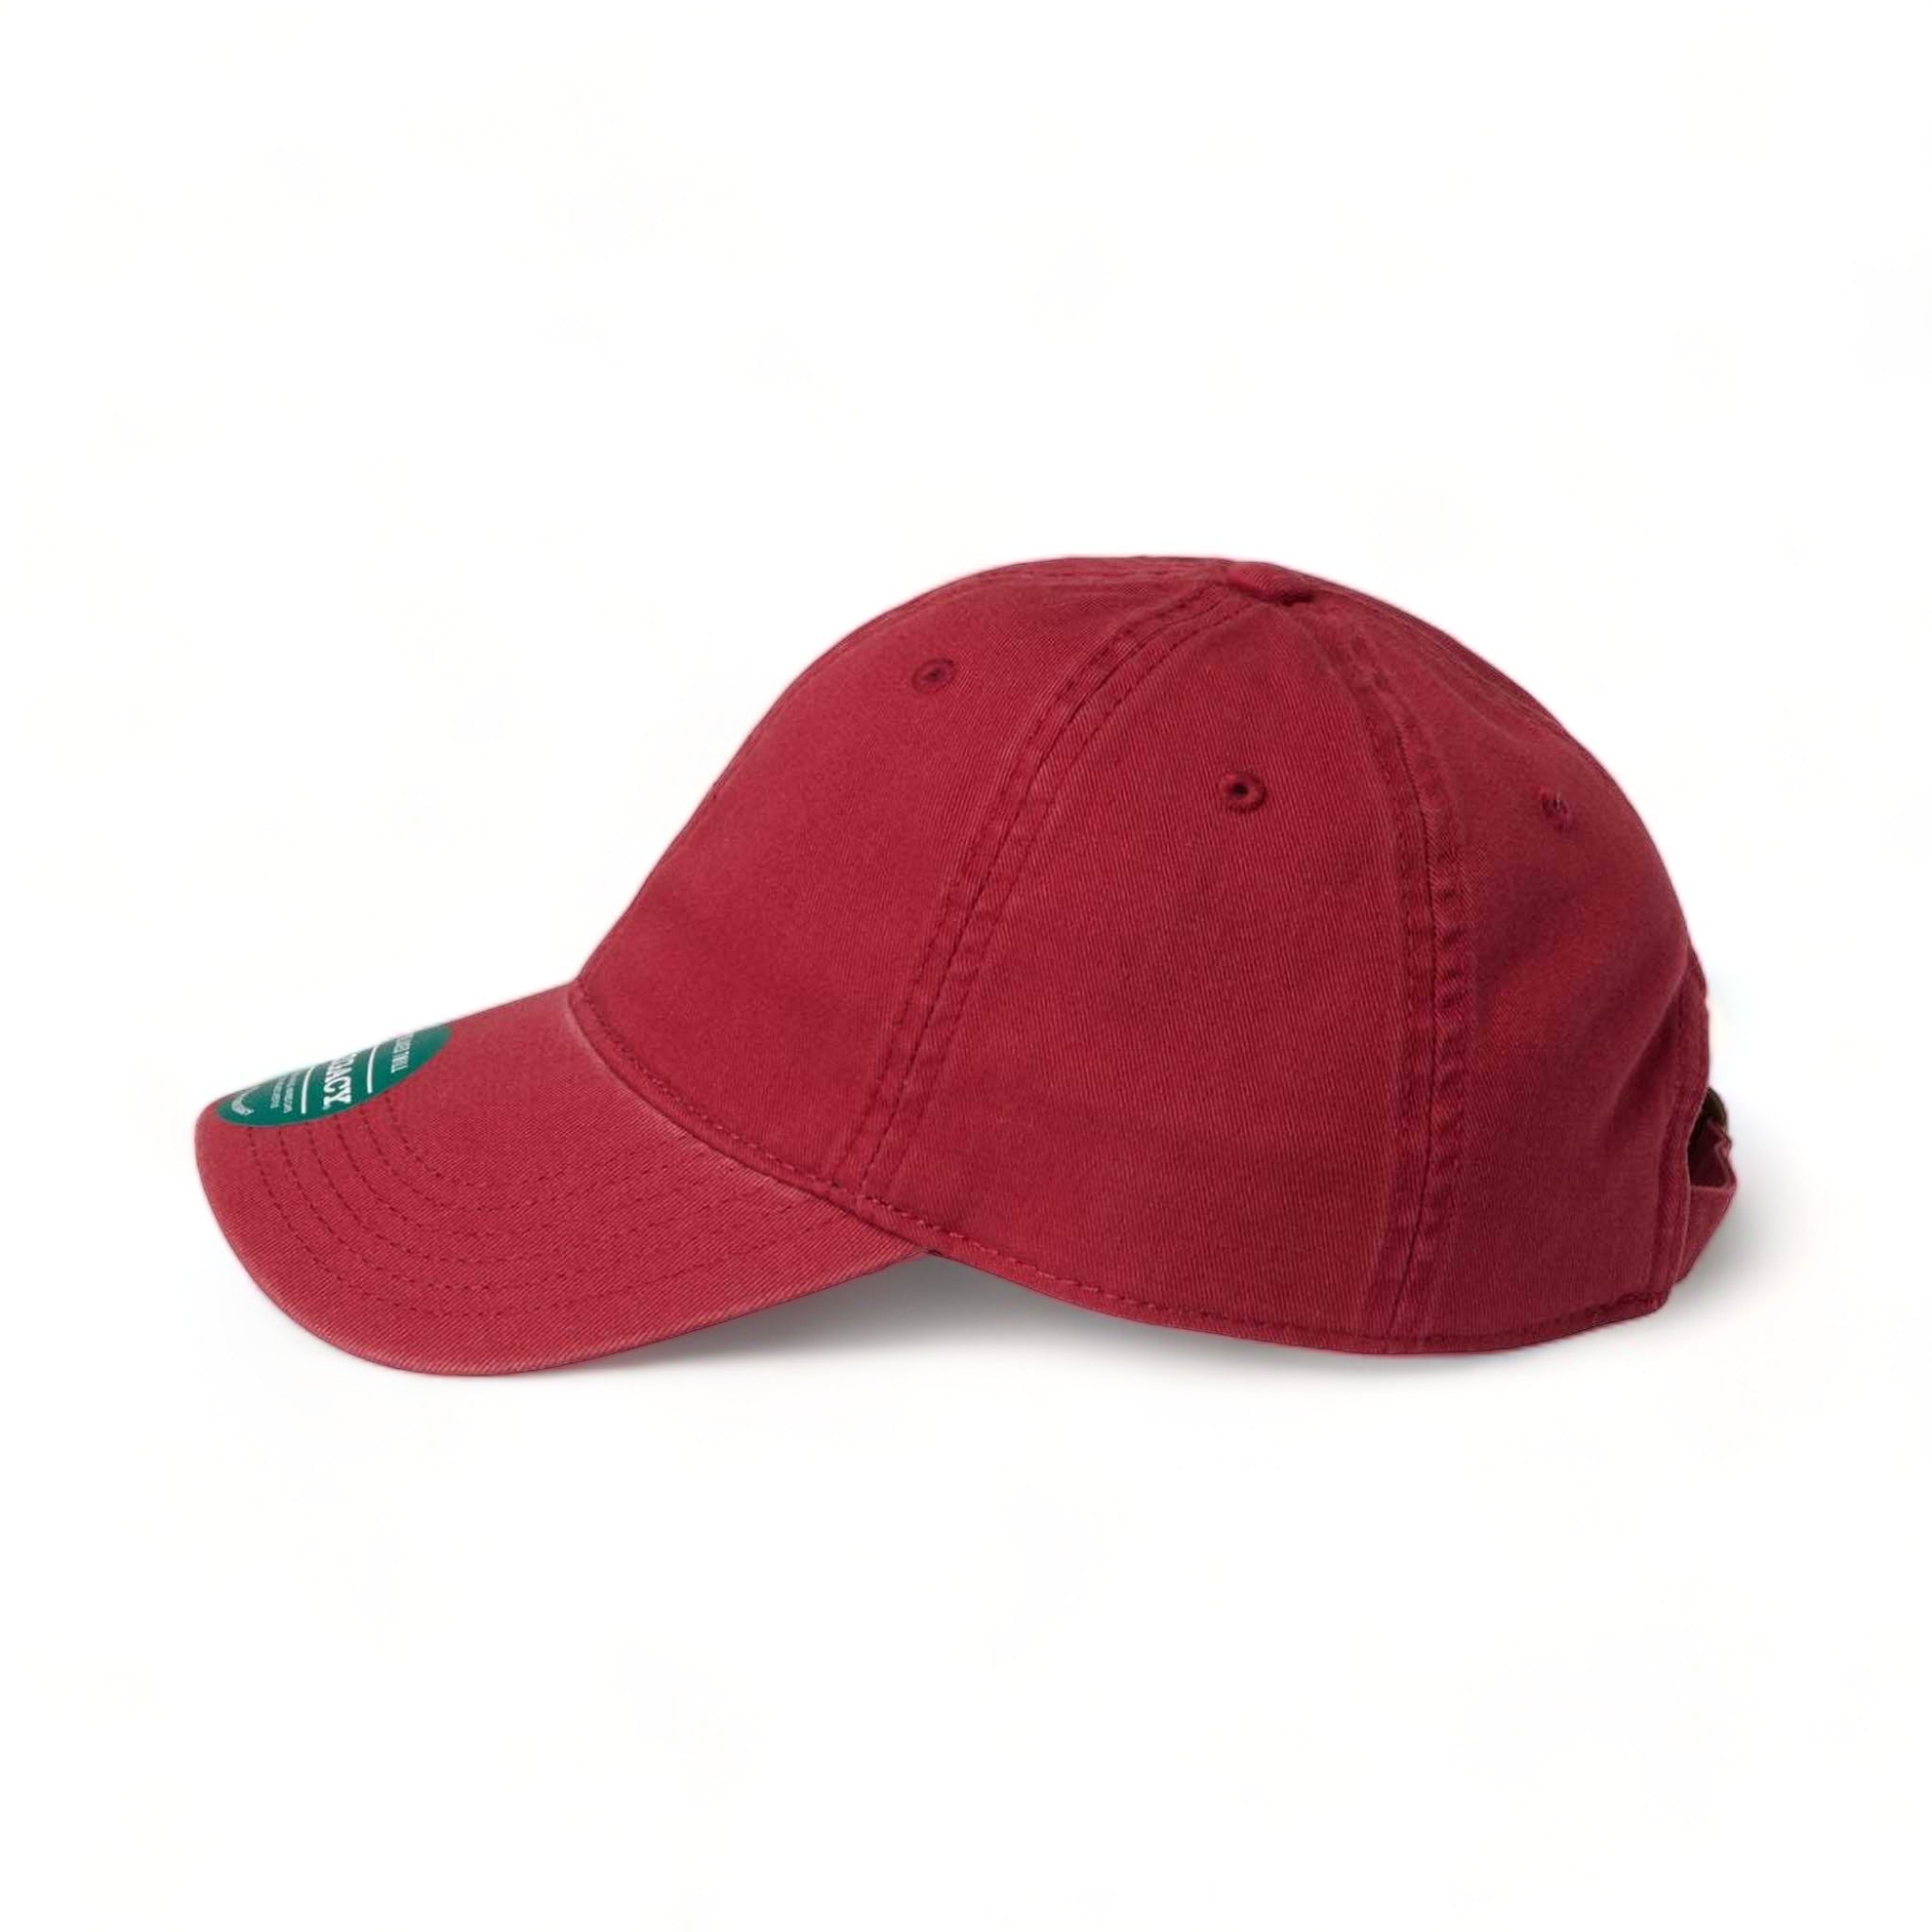 Side view of LEGACY EZA custom hat in cardinal